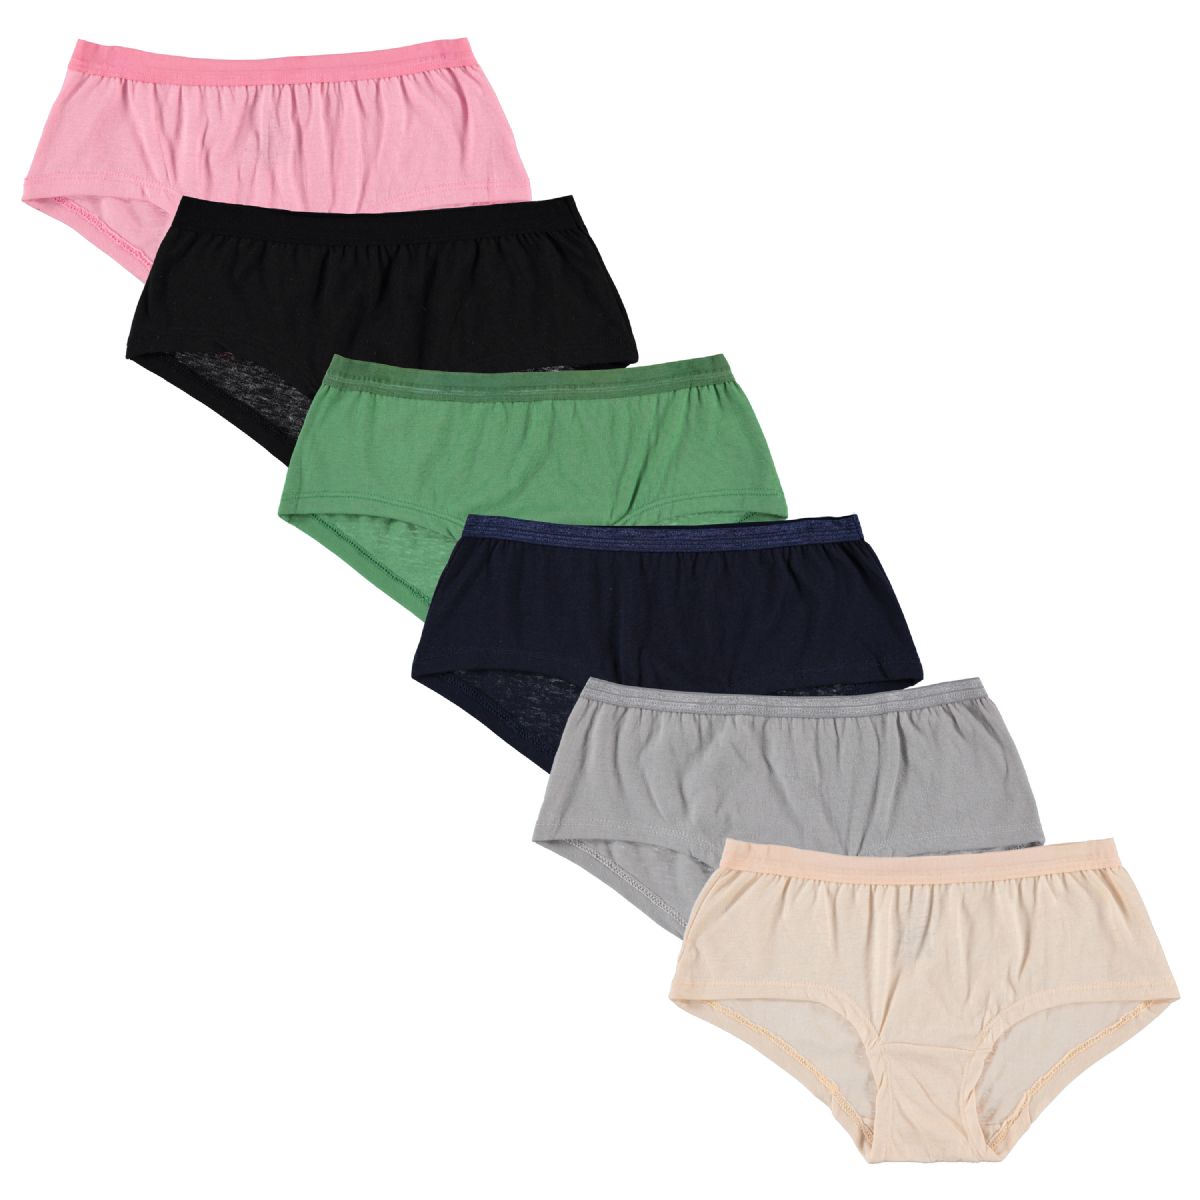 24 Bulk Yacht & Smith Womens Cotton Lycra Underwear, Panty Briefs, 95% Cotton Soft Assorted Colors, Size Large